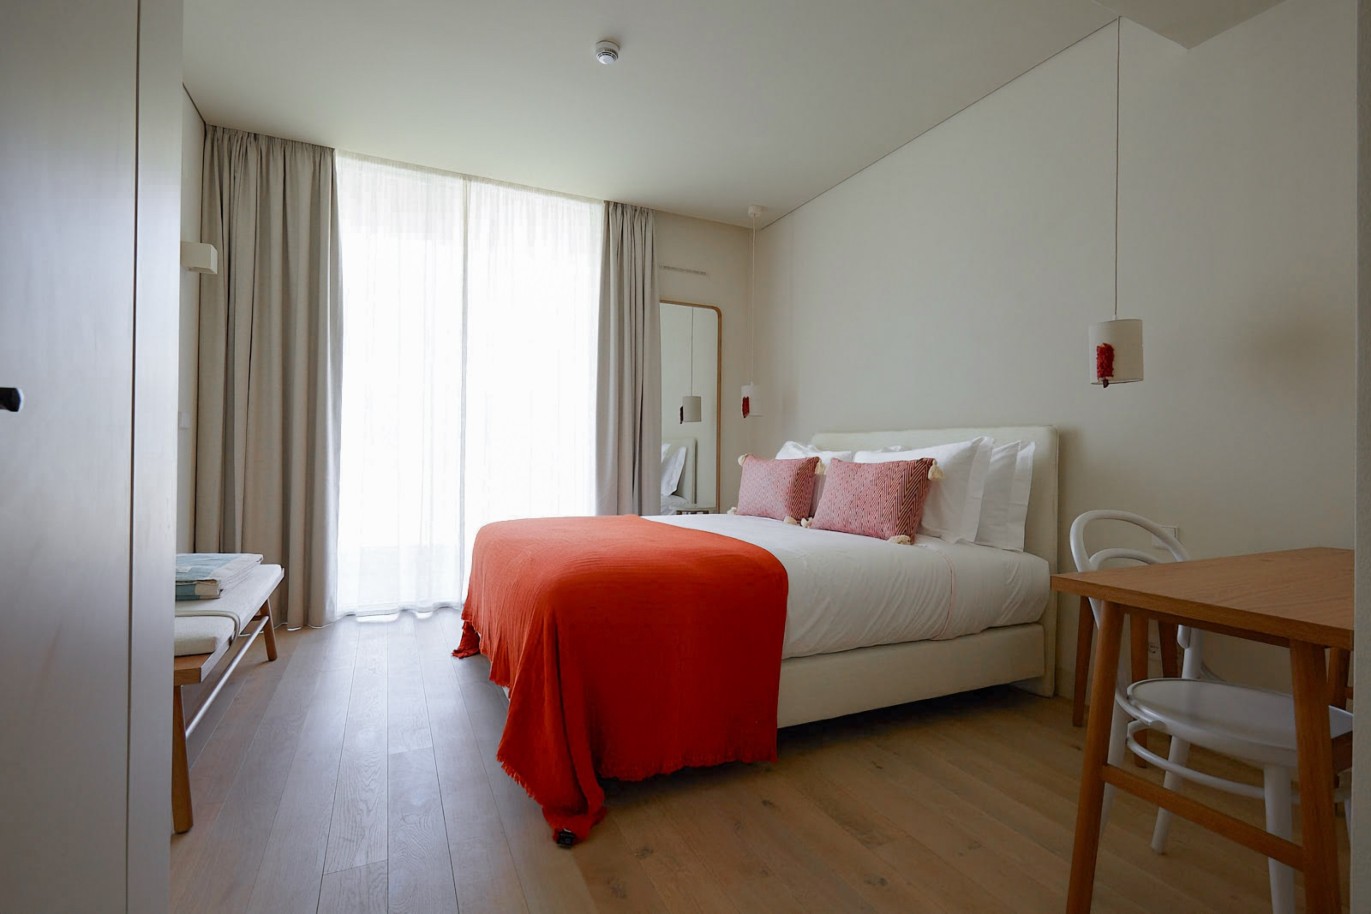 2 bedroom apartment in resort, for sale in Porches, Algarve_230581